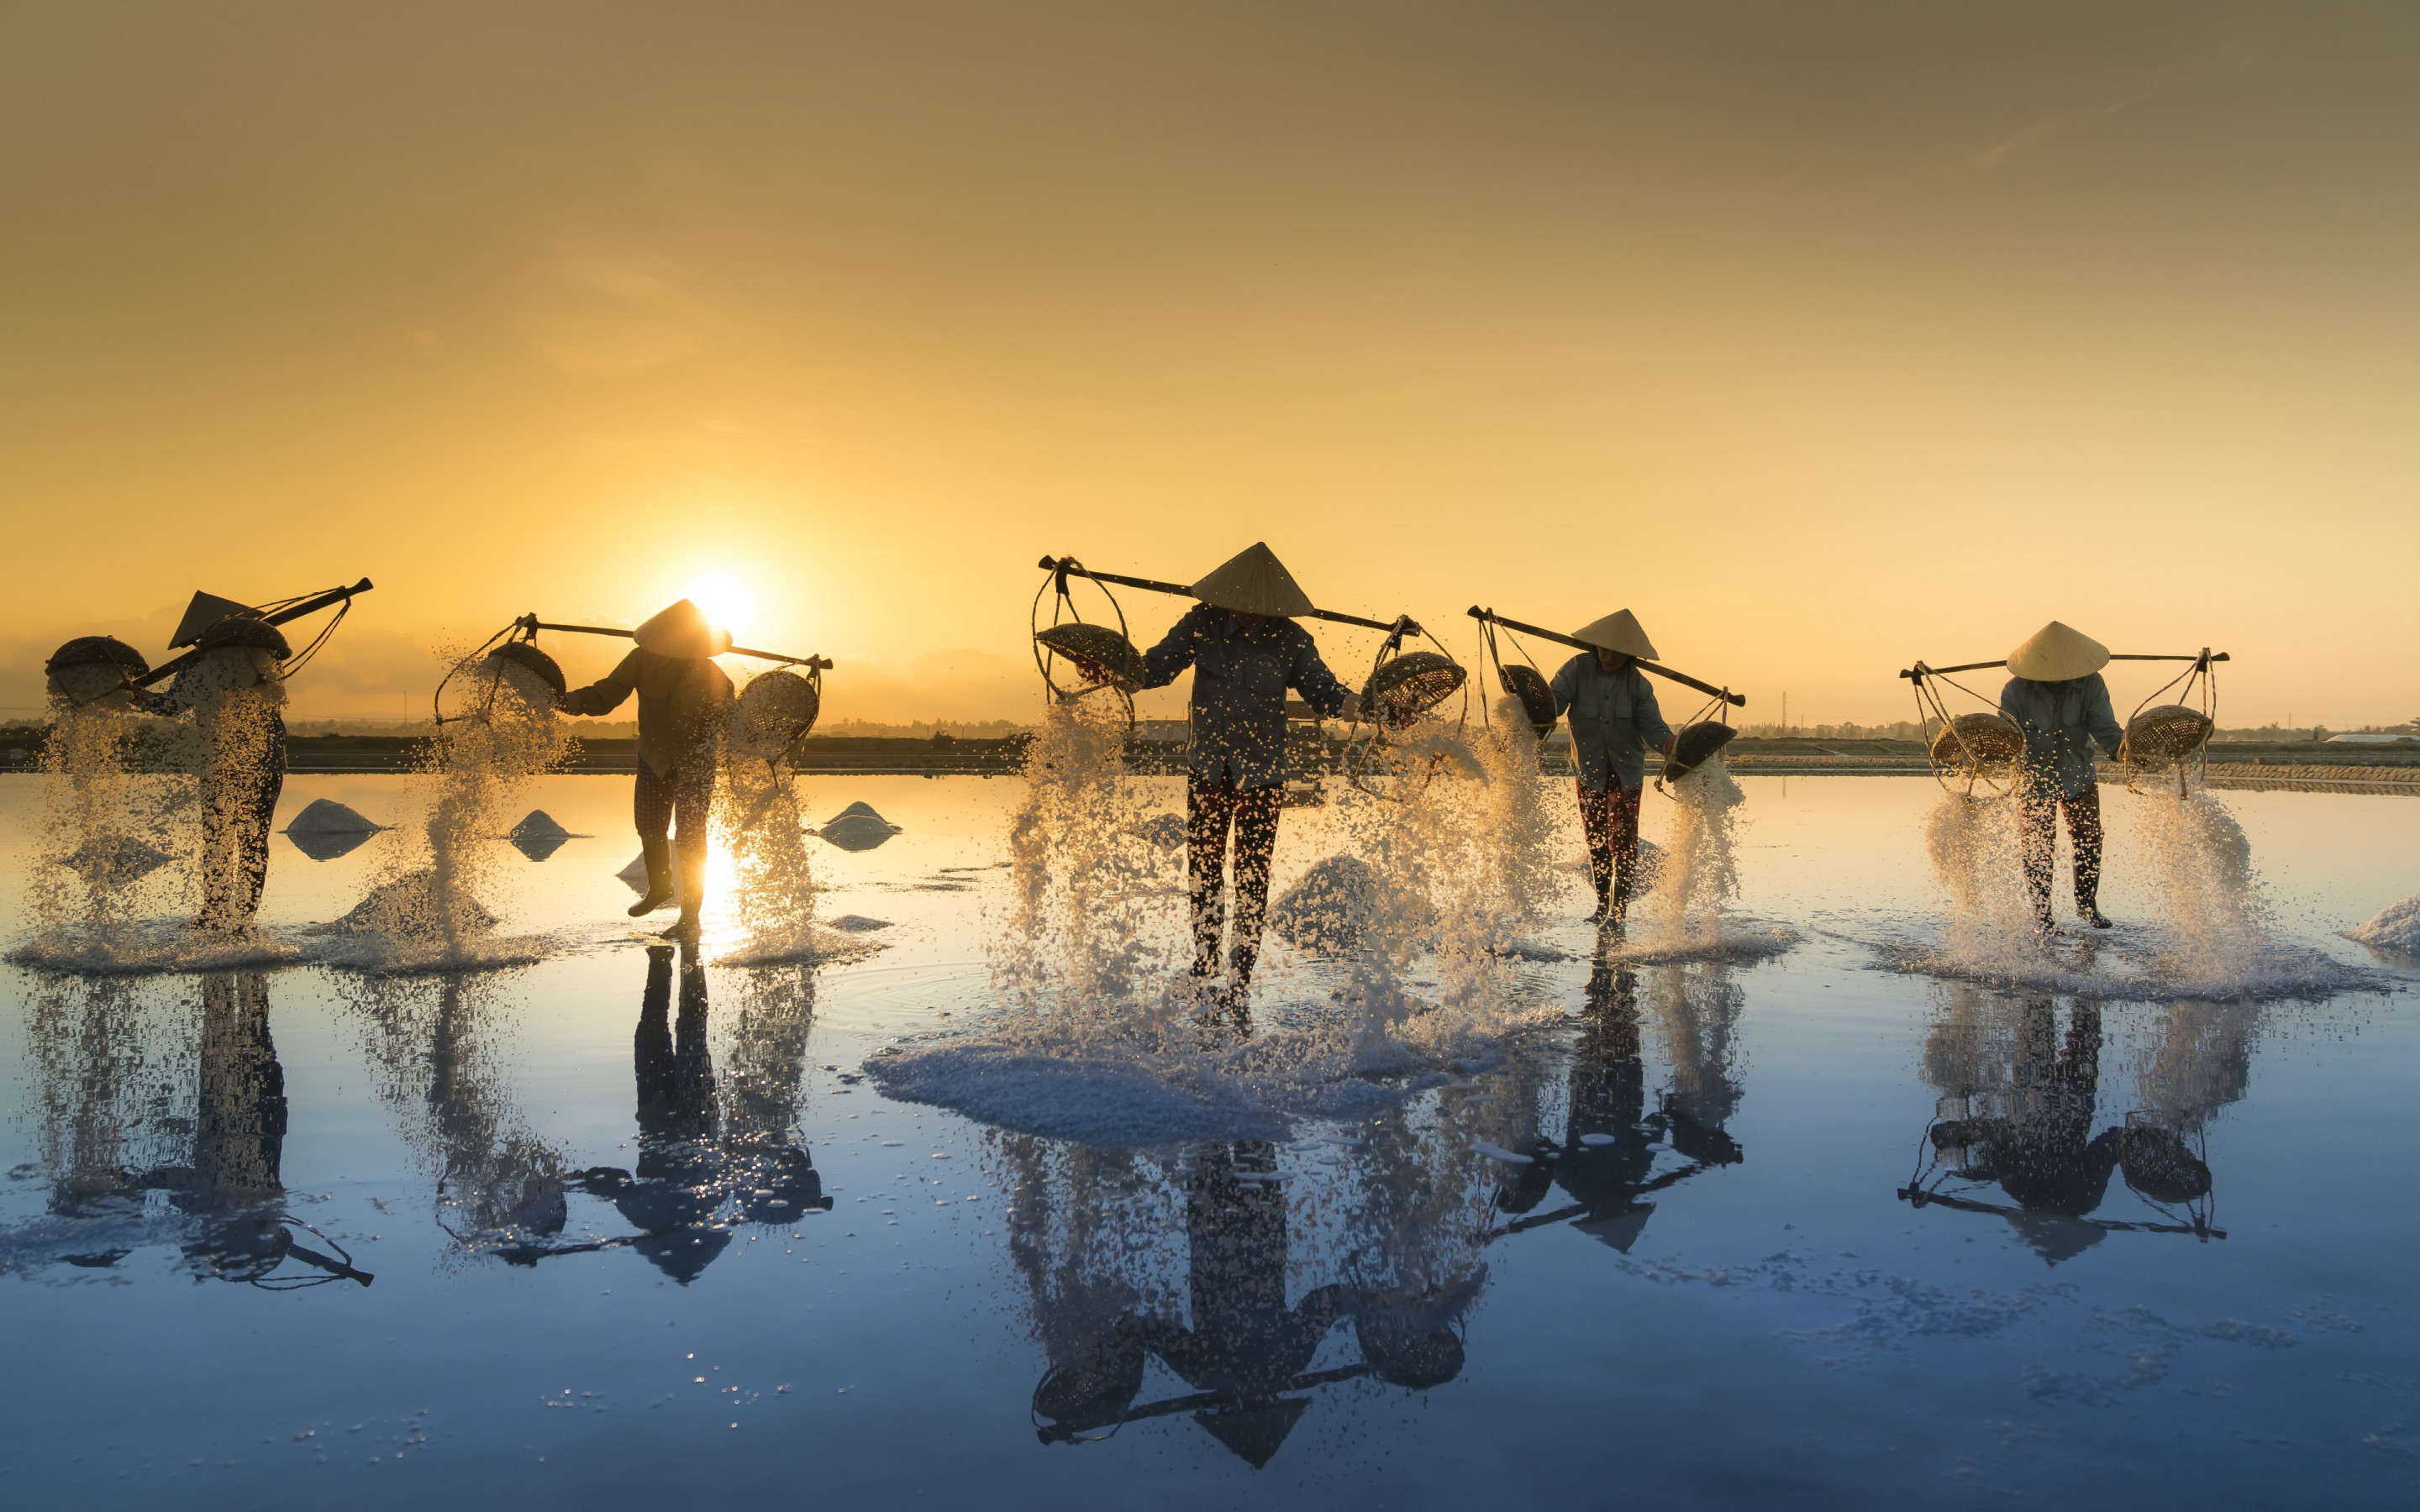 People harvesting salt in Vietnam wallpaper 2880x1800